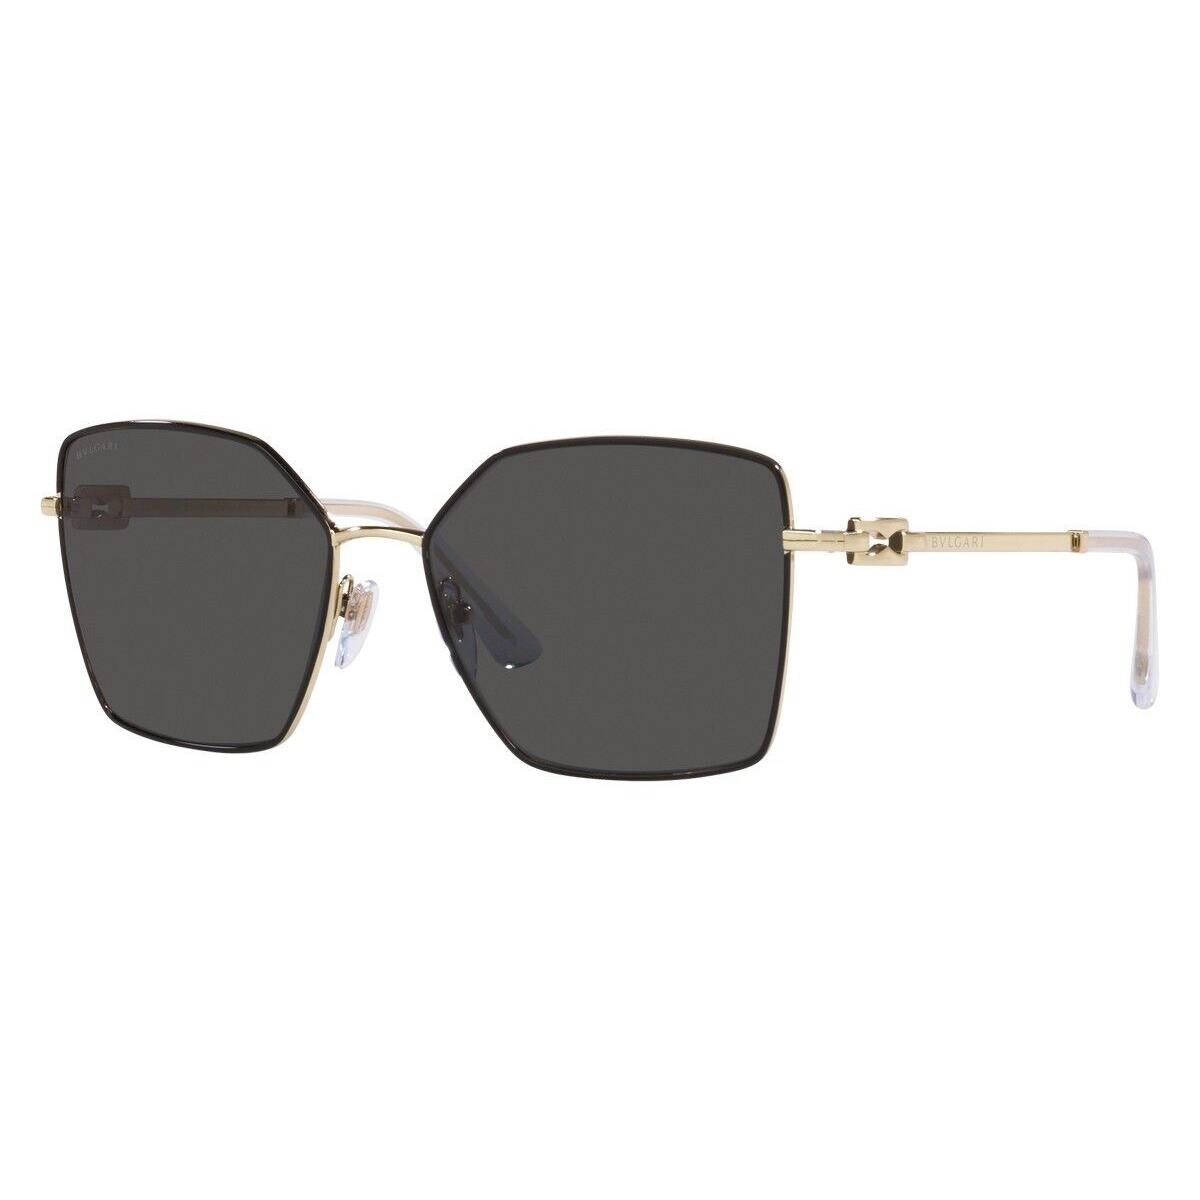 Bvlgari Sunglasses BV6175 202387 Pink Gold Black Frame W/ Dark Grey Lens